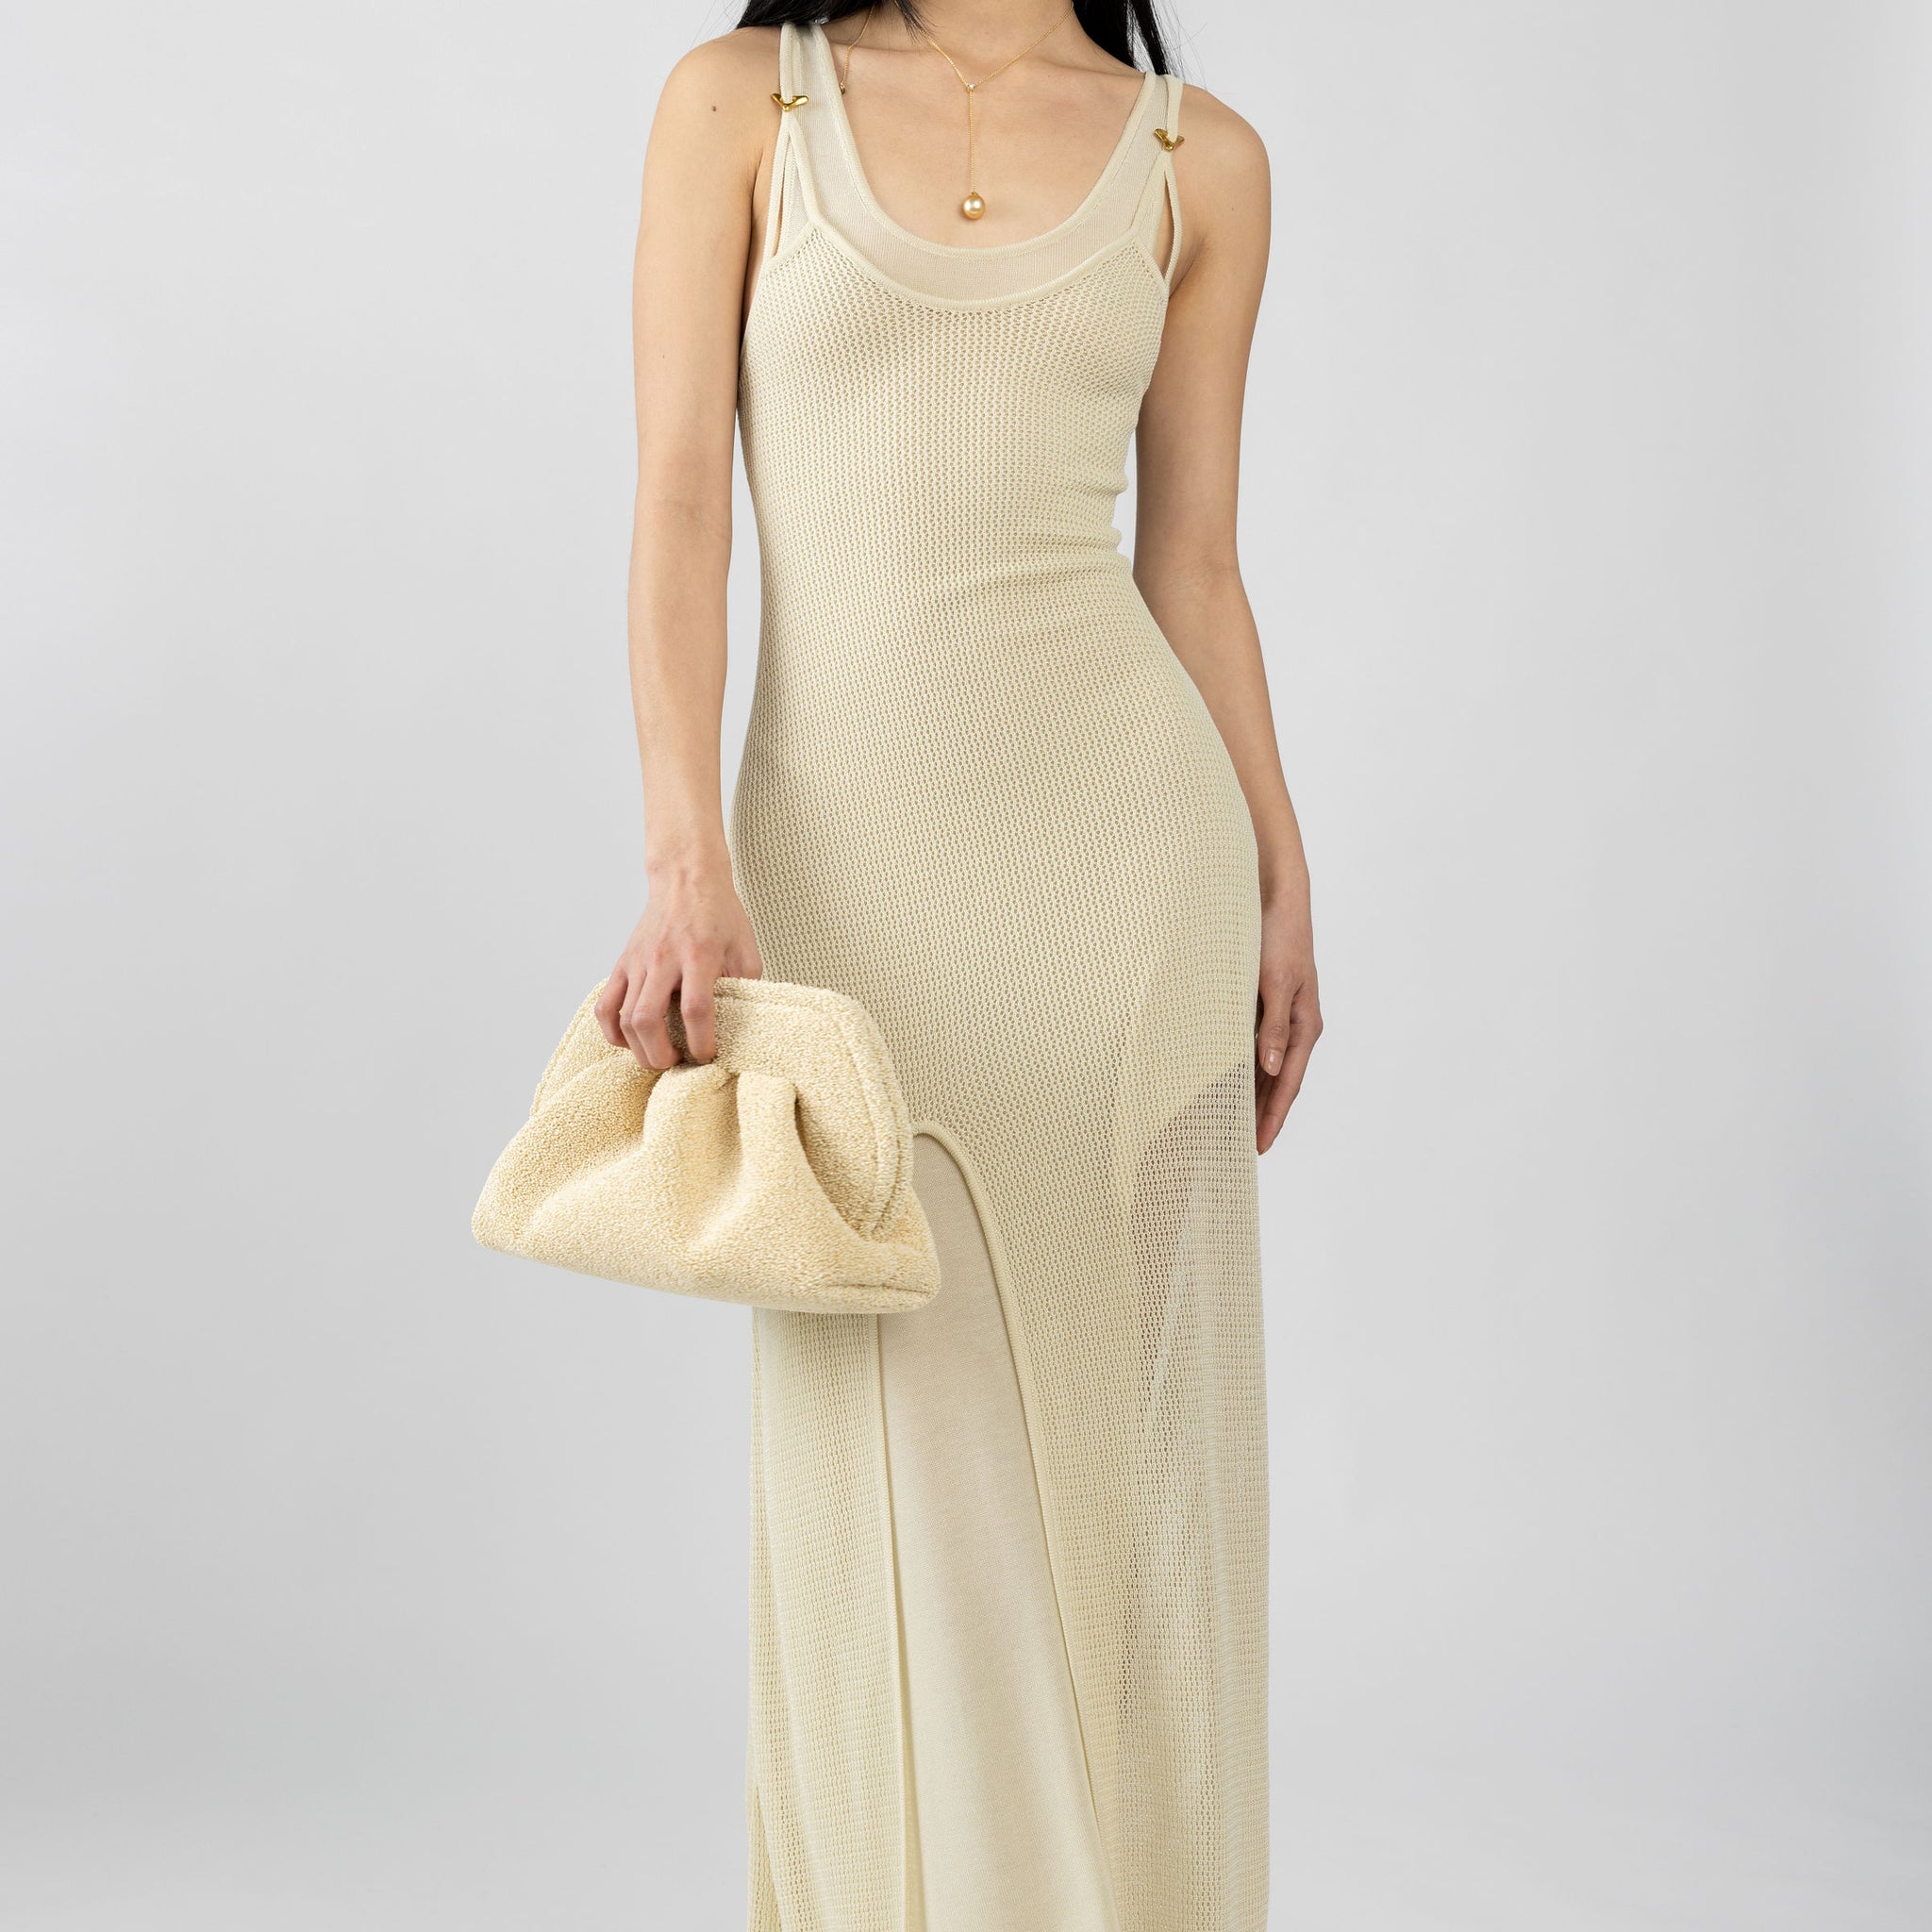 AERON Sirena Cotton Maxi Dress in Creme